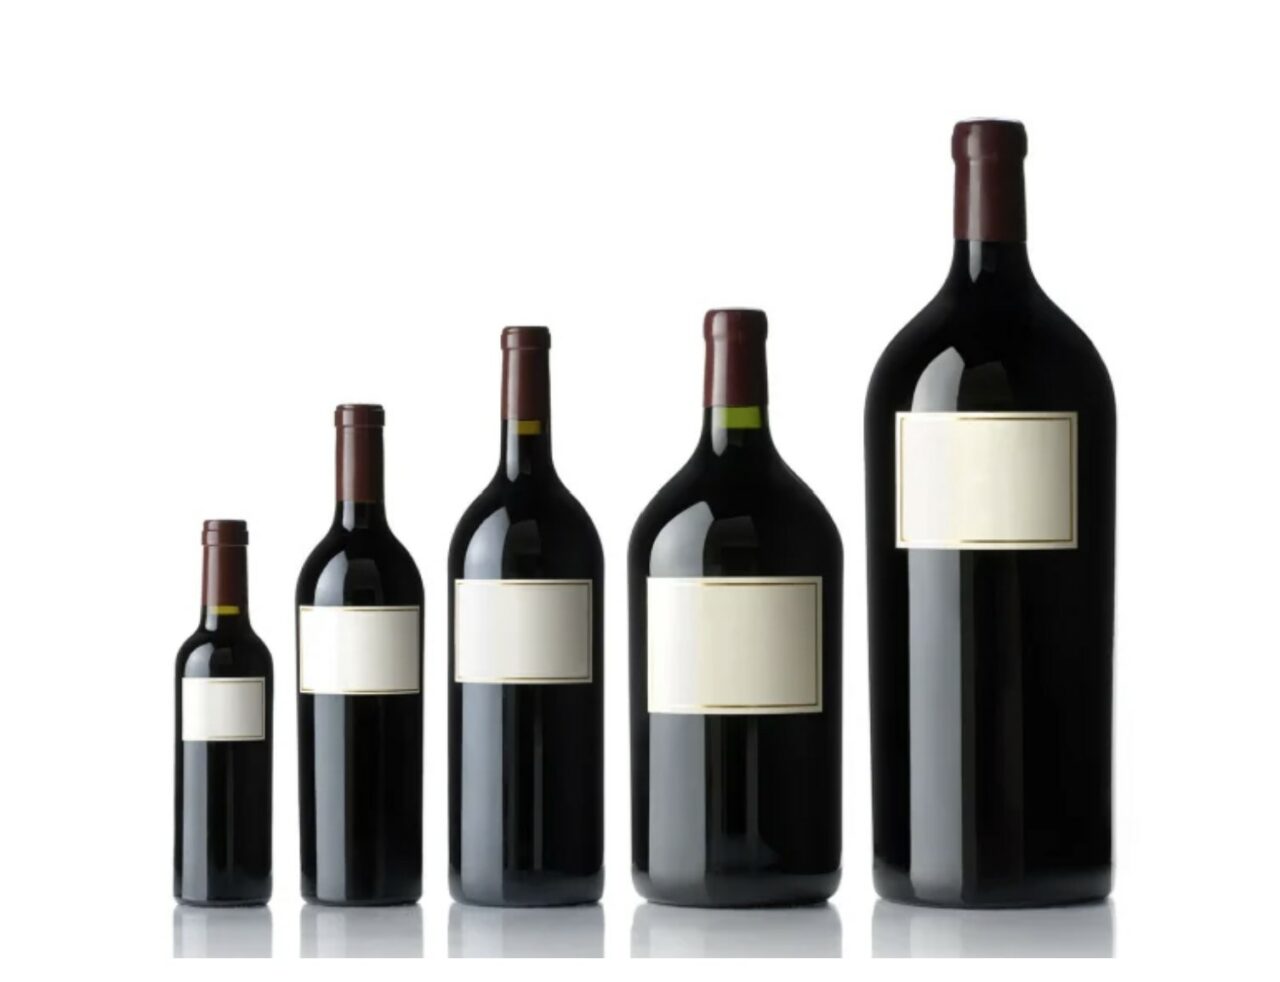 Wine-bottle-sizes-1280x982.jpg